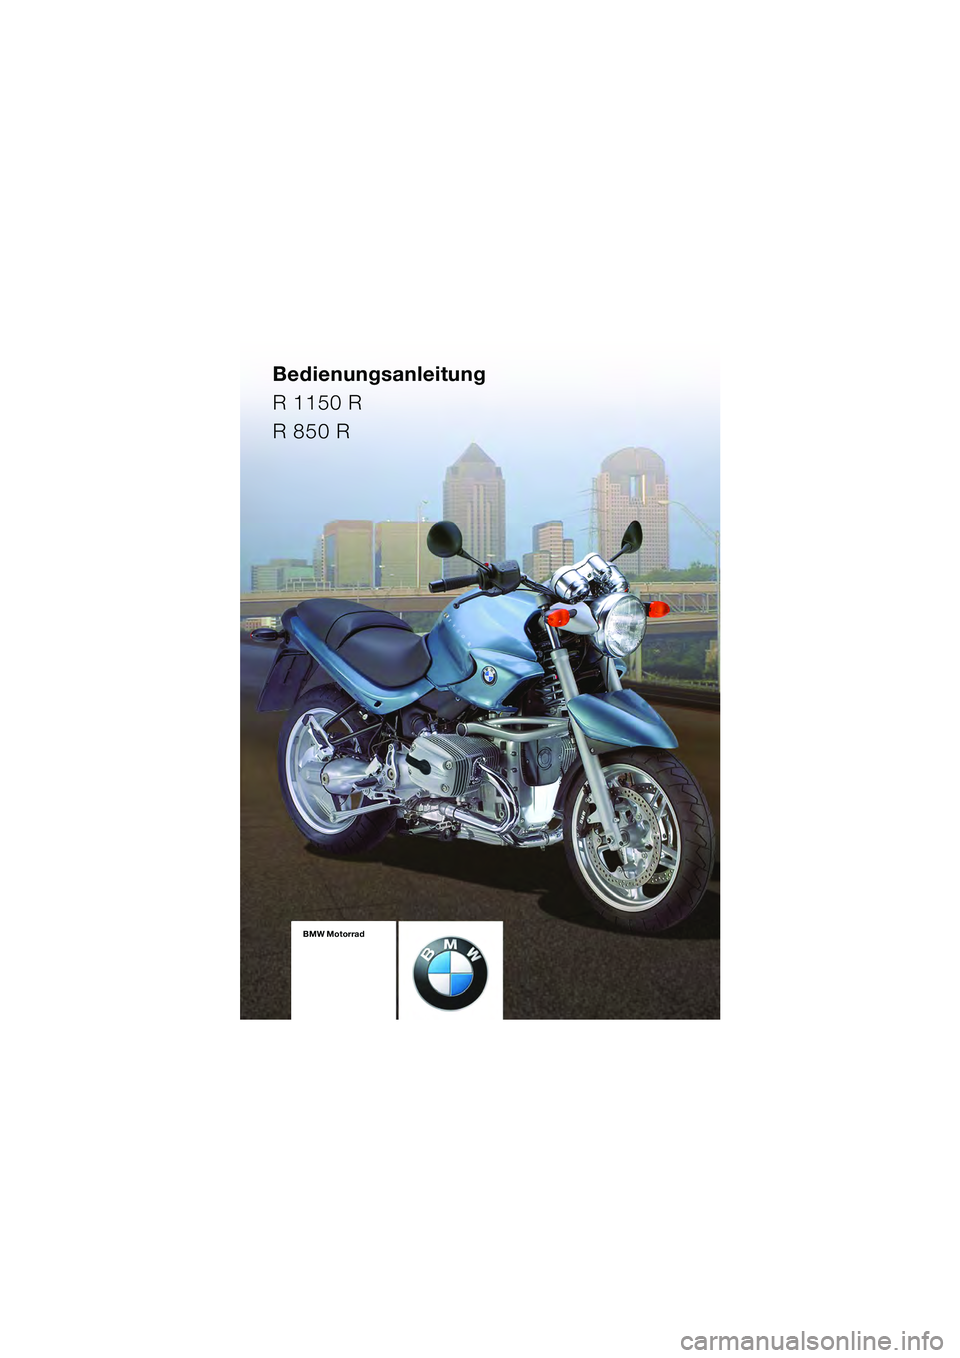 BMW MOTORRAD R 1150 R 2004  Betriebsanleitung (in German) Bedienungsanleitung
R 1150 R
R 850 R
BMW Motorrad
10r28cod3.fm  Seite 89 Dienstag, 25. Mai 2004  4:47 16 